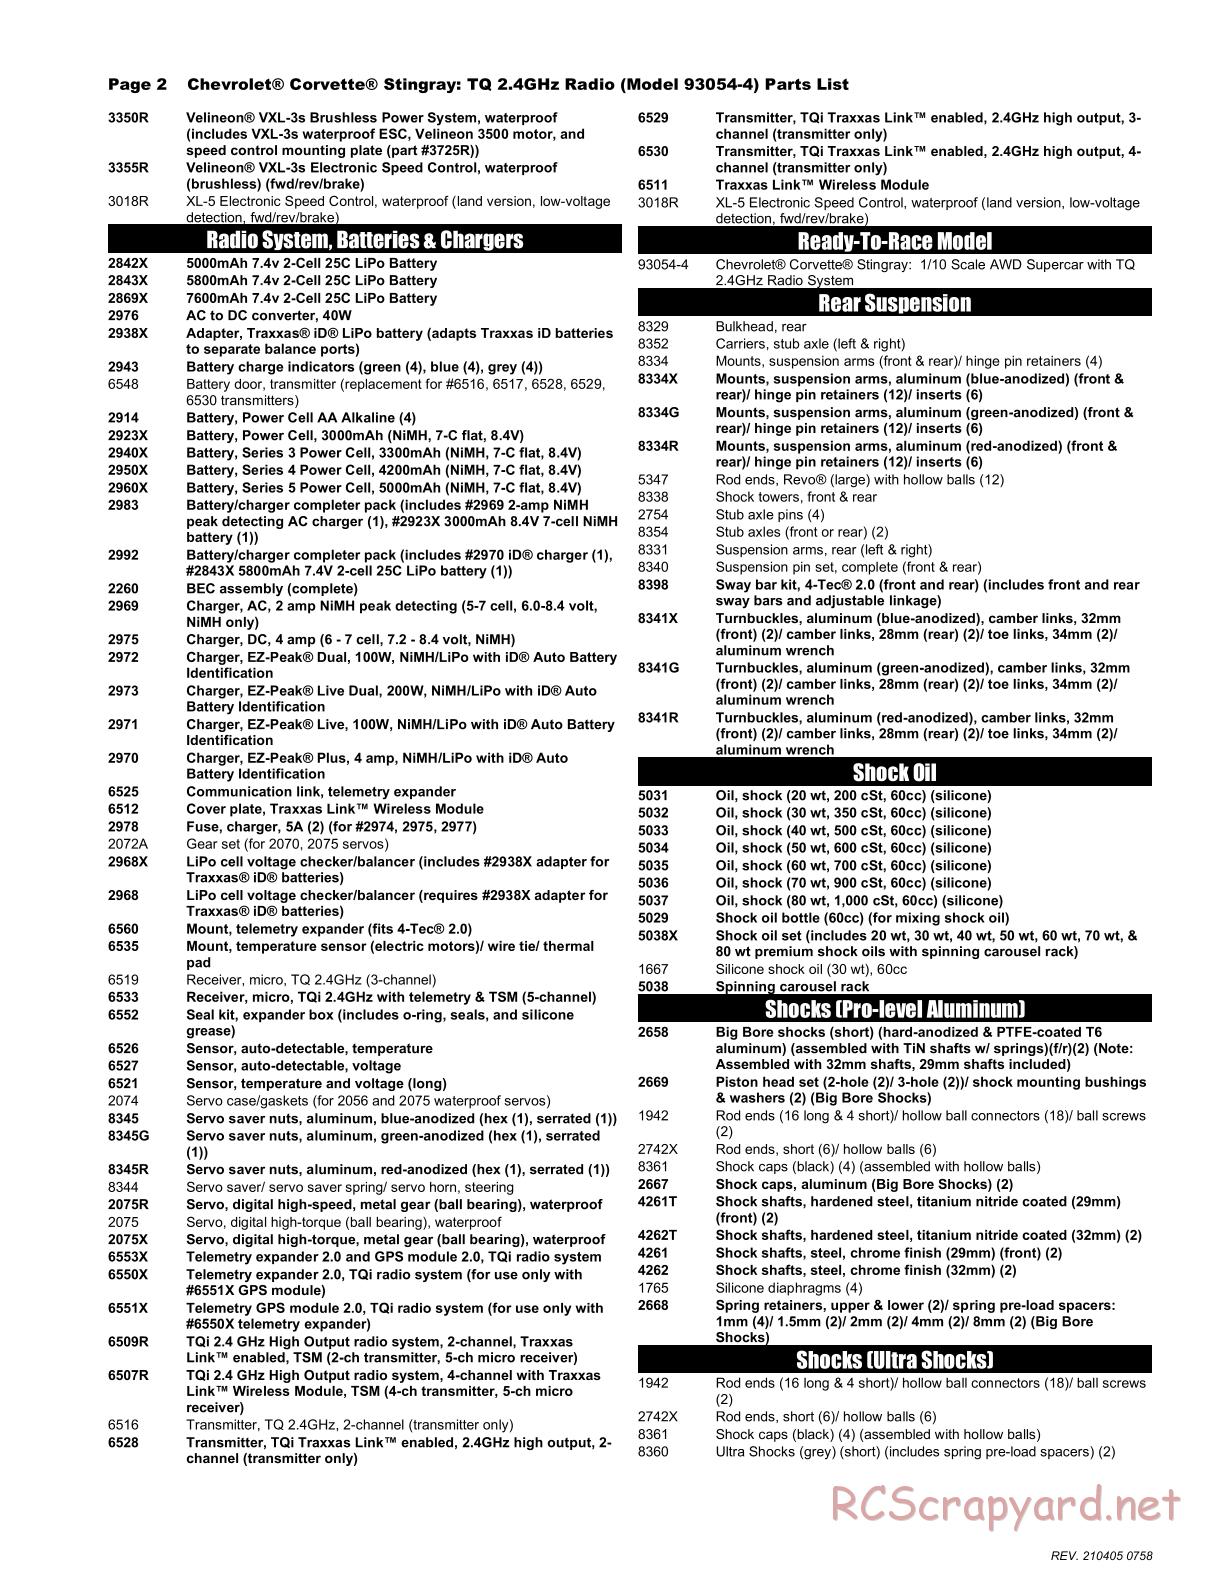 Traxxas - Corvette Stingray - Parts List - Page 2